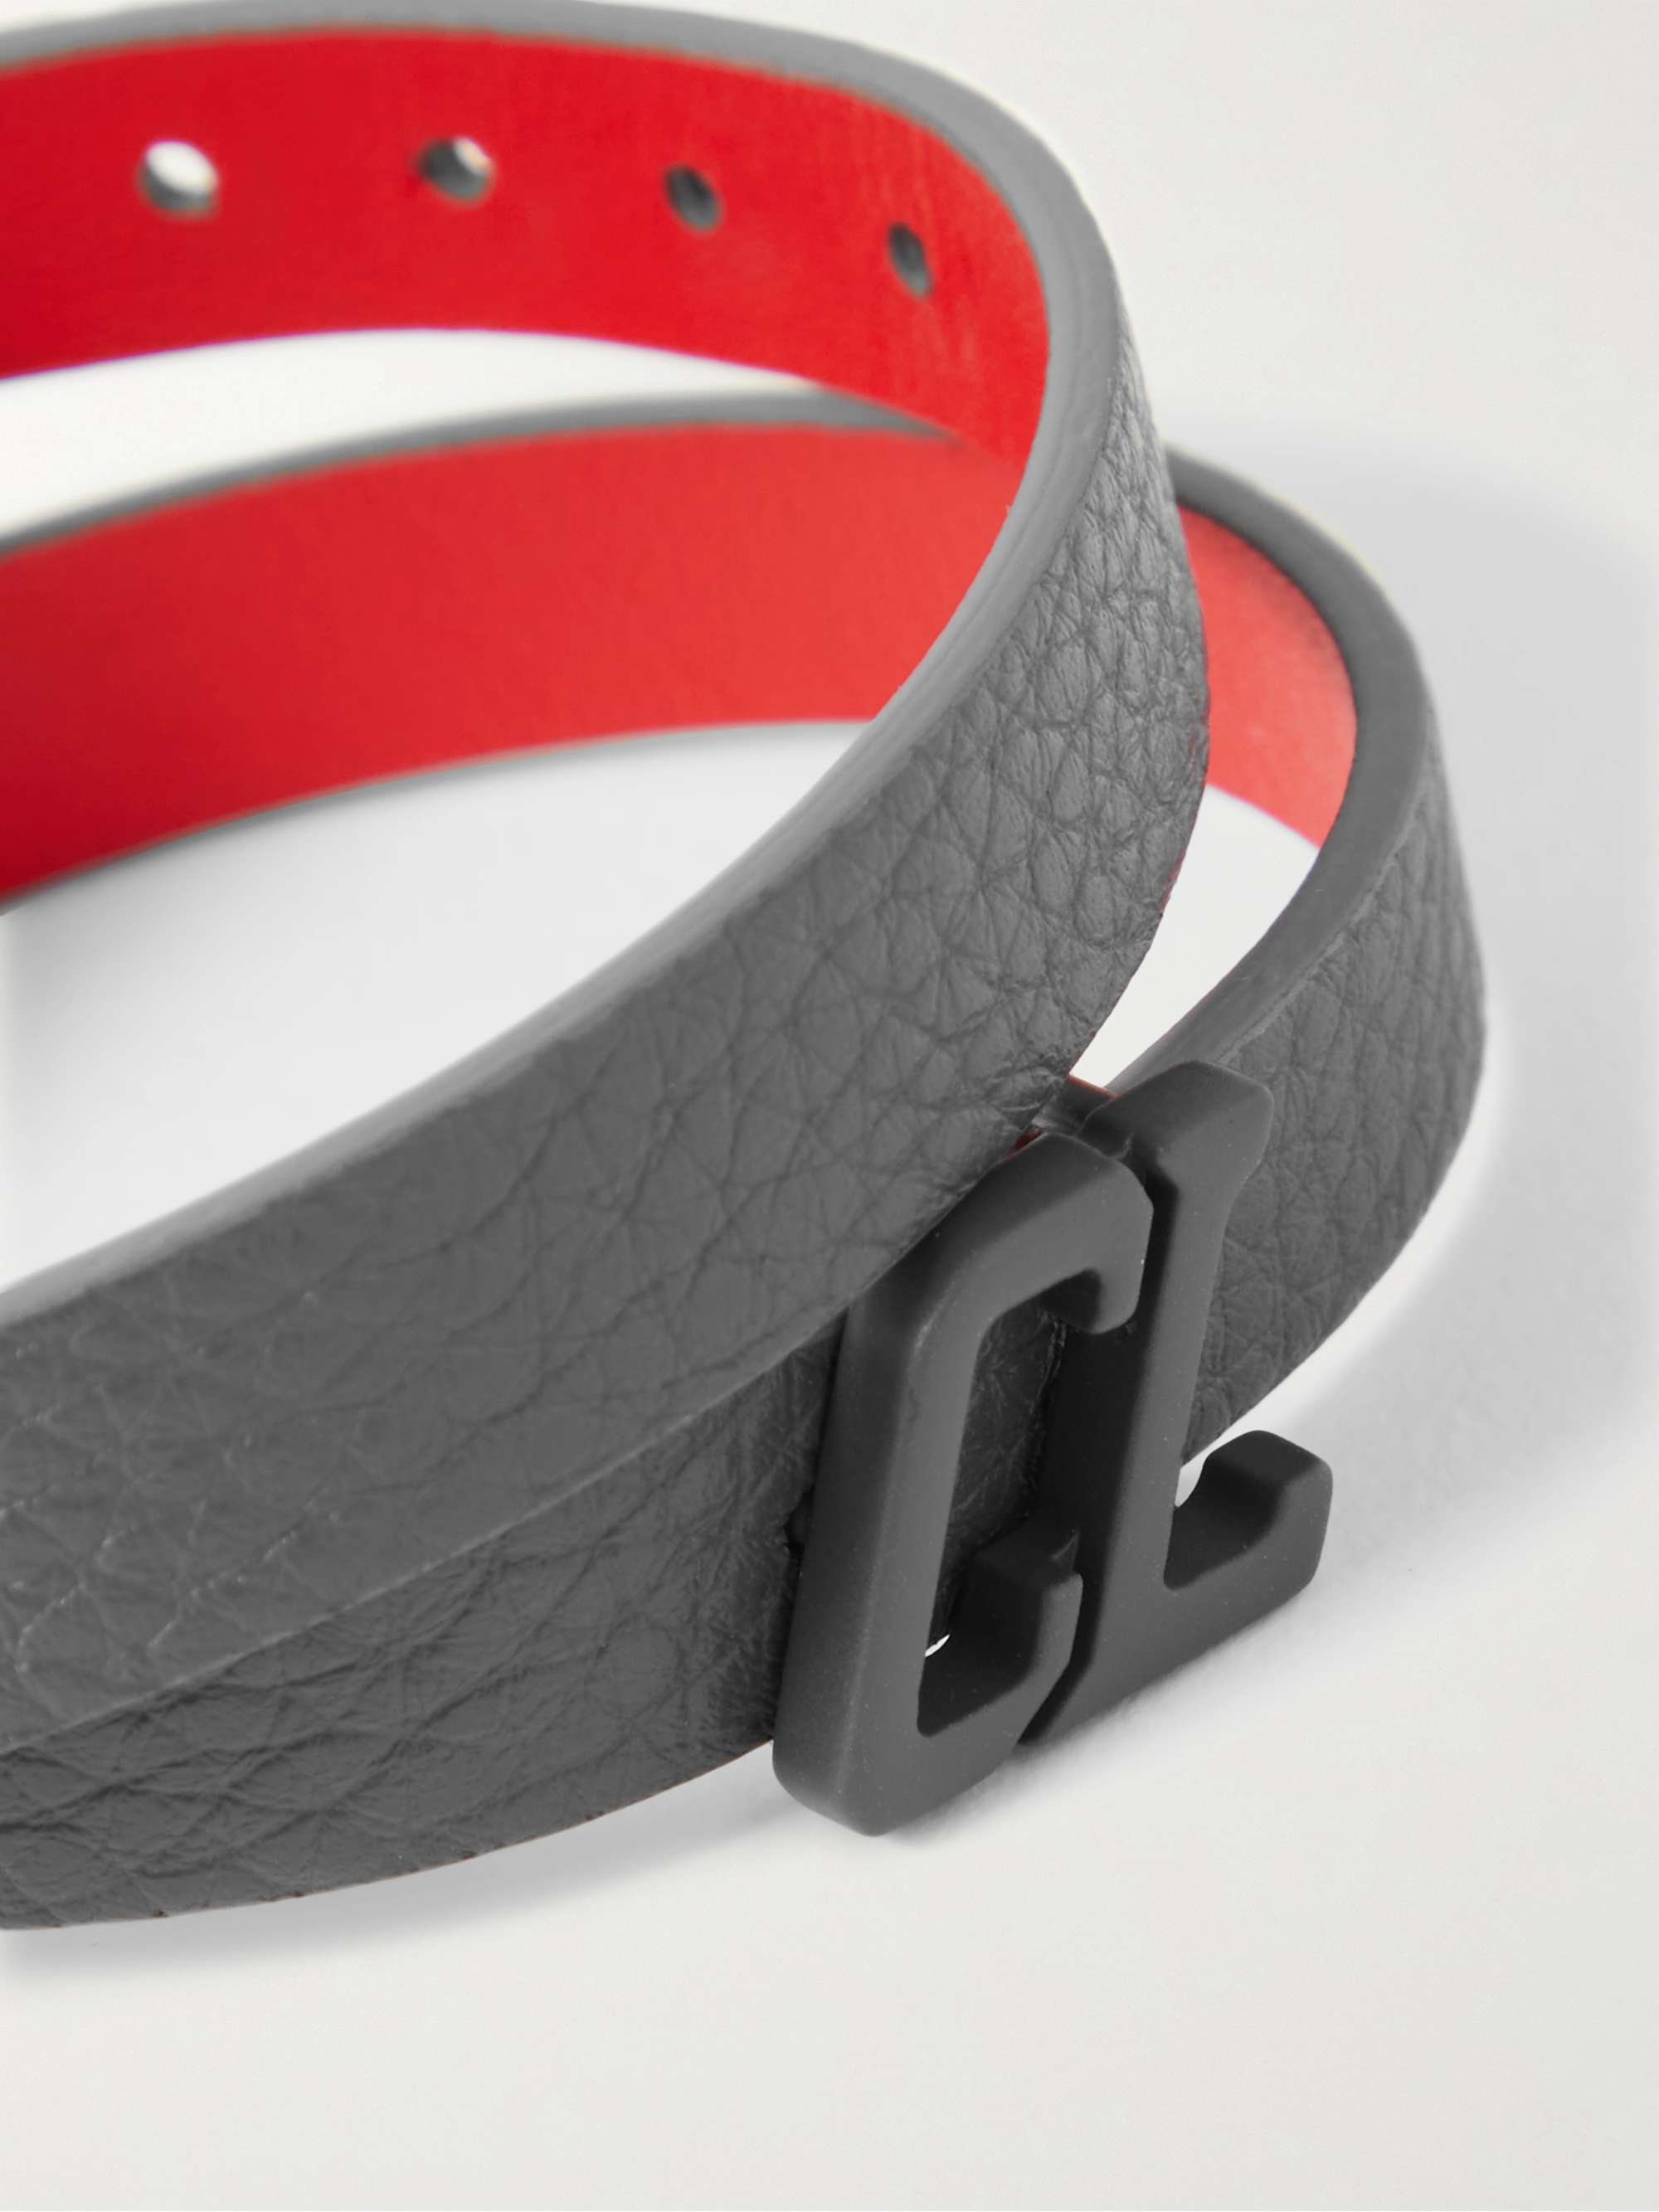 CHRISTIAN LOUBOUTIN Full-Grain Leather and Gunmetal-Tone Wrap Bracelet